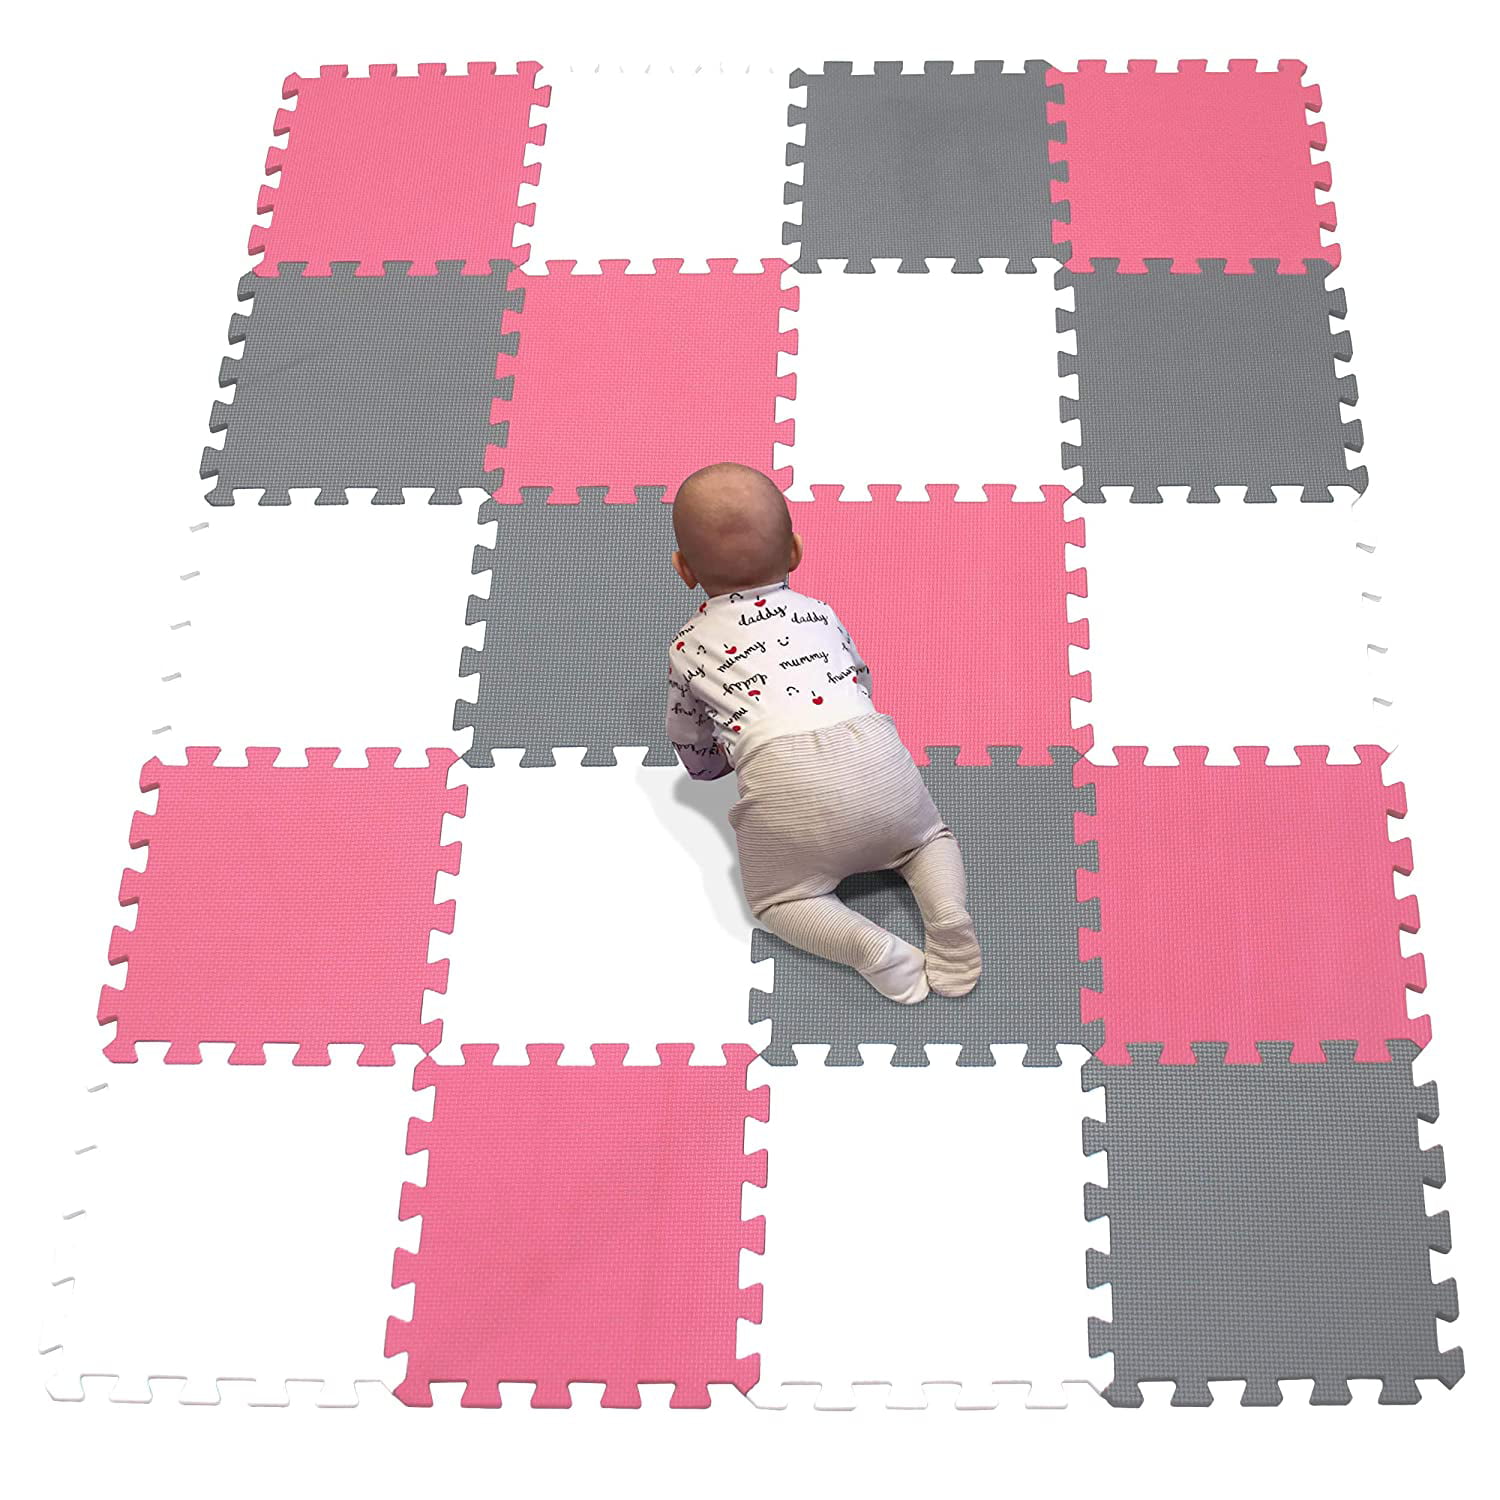 Details about   Large Soft Foam EVA Floor Mat Tiles Interlocking Garden Play Gym Yoga 30 x 30cm 